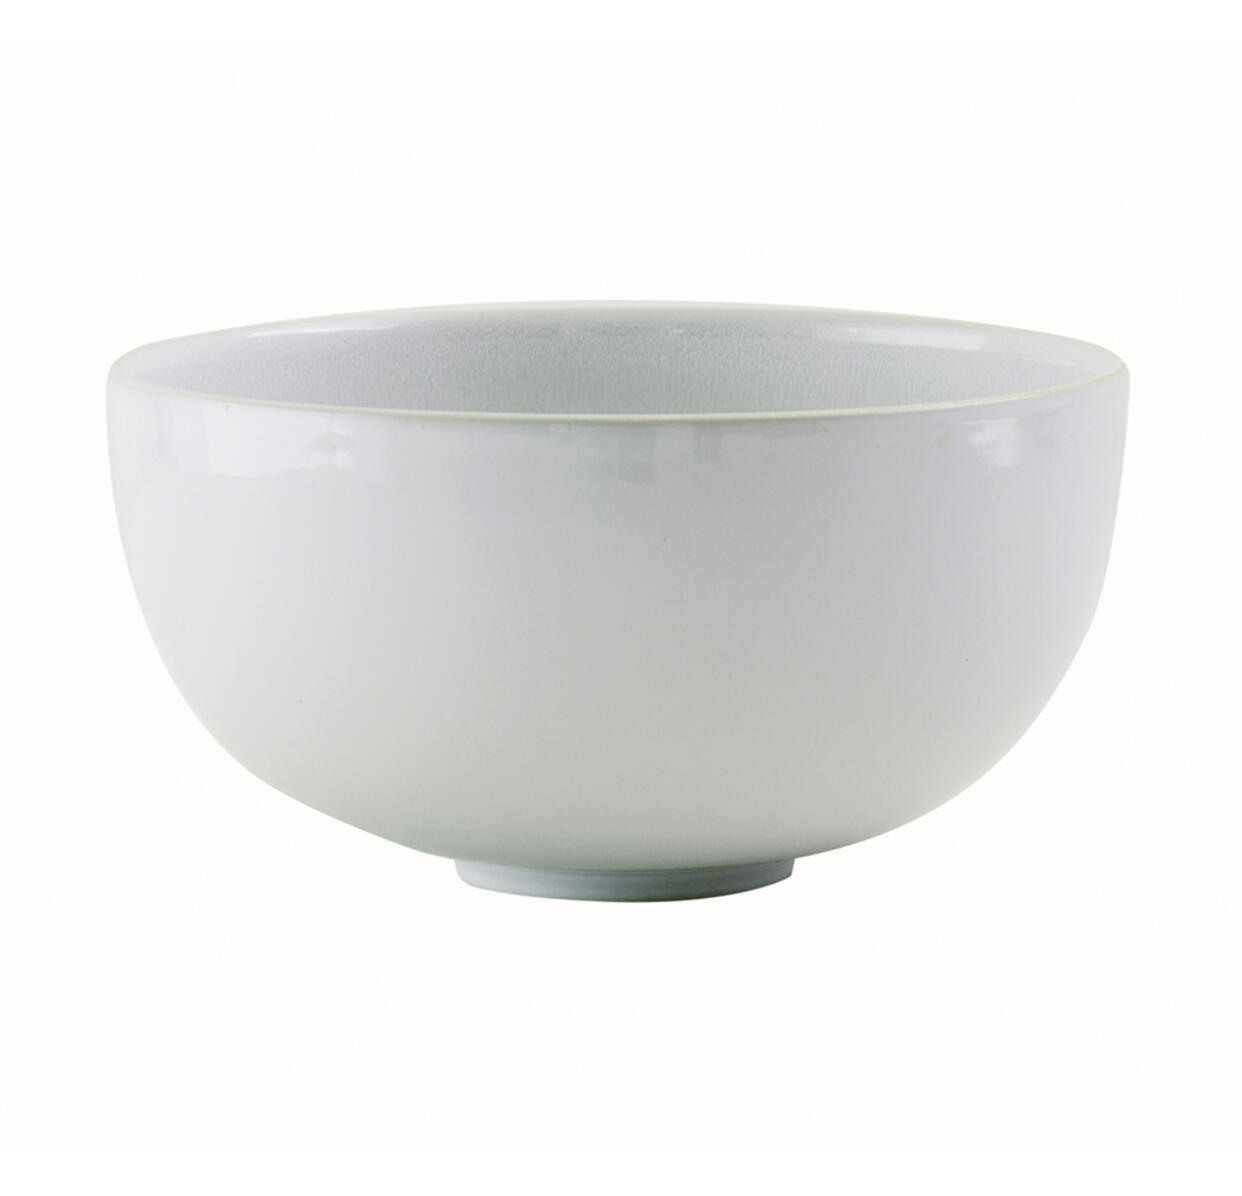 serving bowl m tourron neige ceramic manufacturer